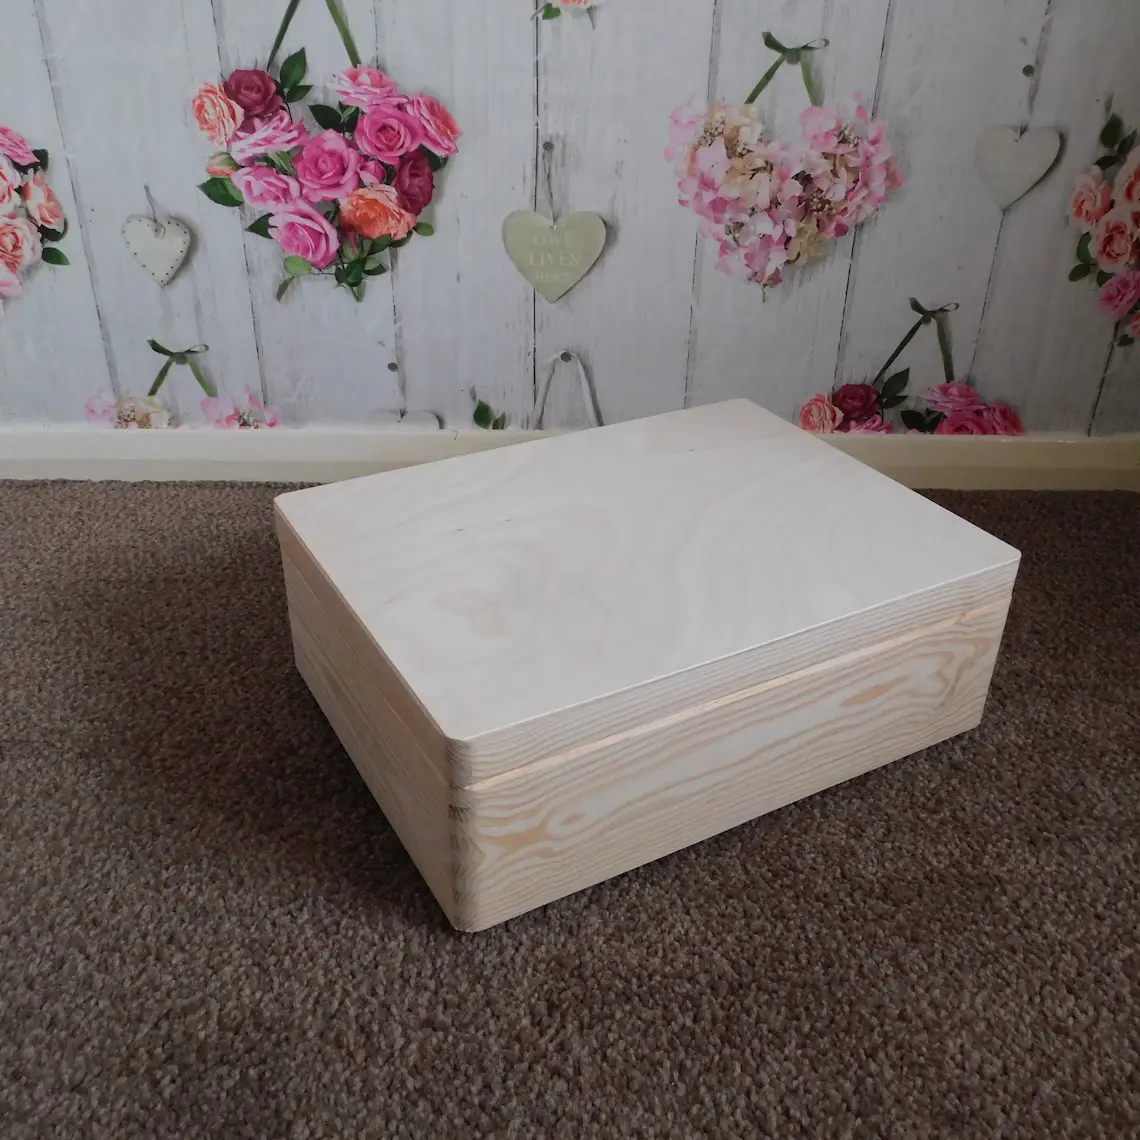 Natural Unpainted Wooden Box With Lid - L40cm x W30cm x H14cm - Without Handles